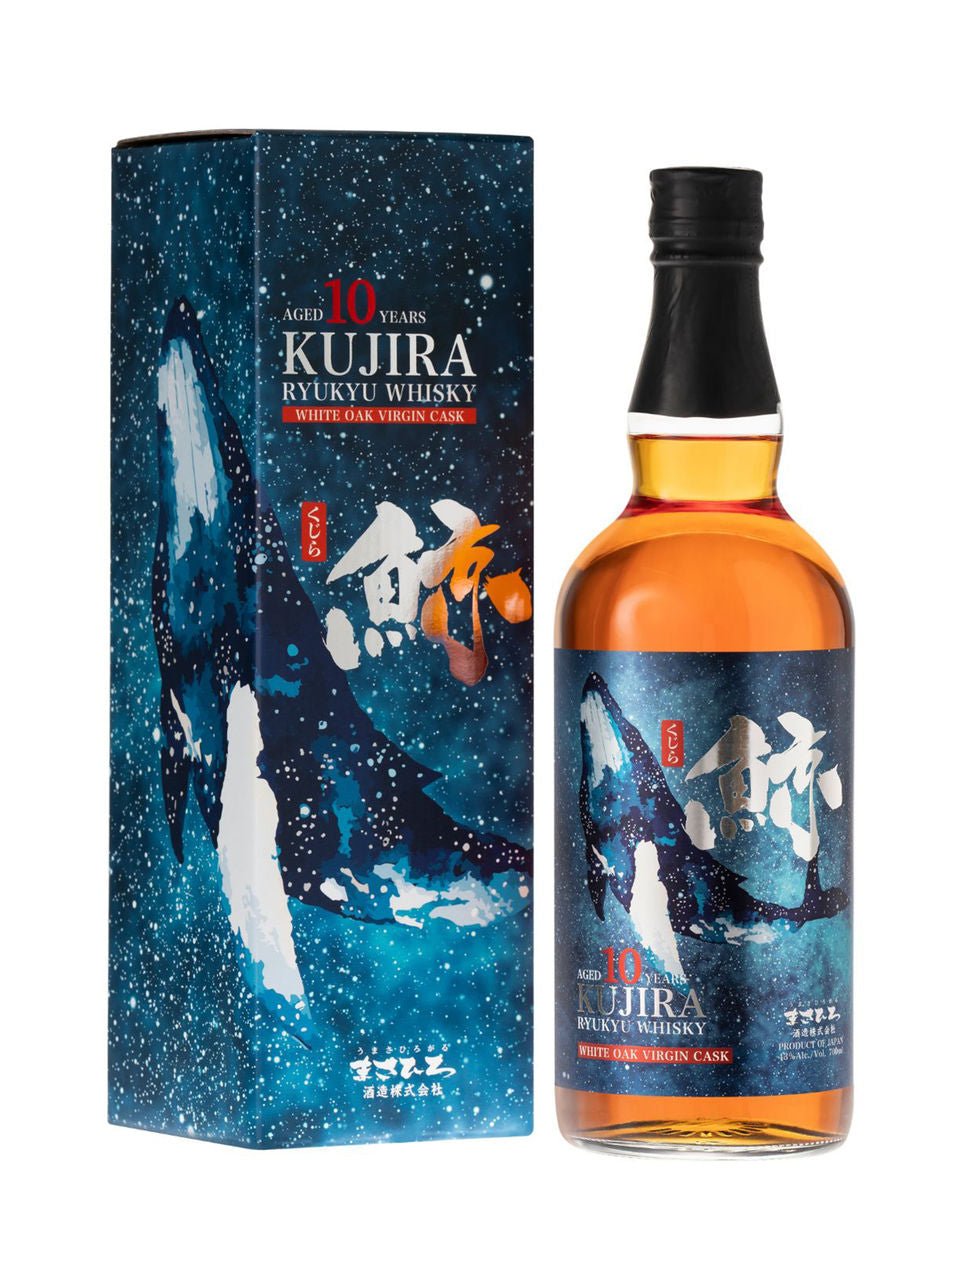 Kujira 10 Year Old Single Grain Whisky